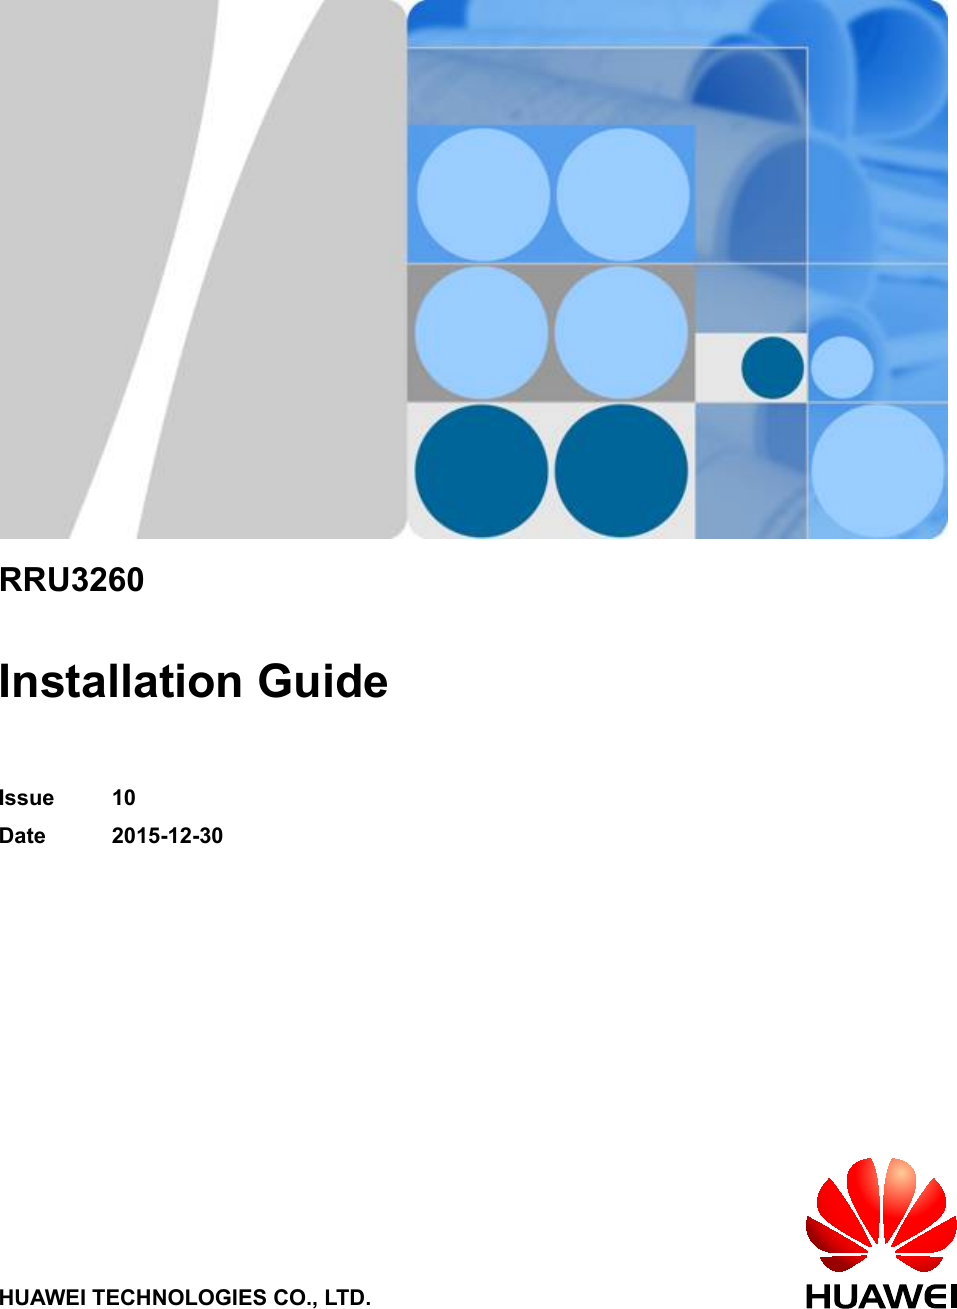 RRU3260Installation GuideIssue 10Date 2015-12-30HUAWEI TECHNOLOGIES CO., LTD.